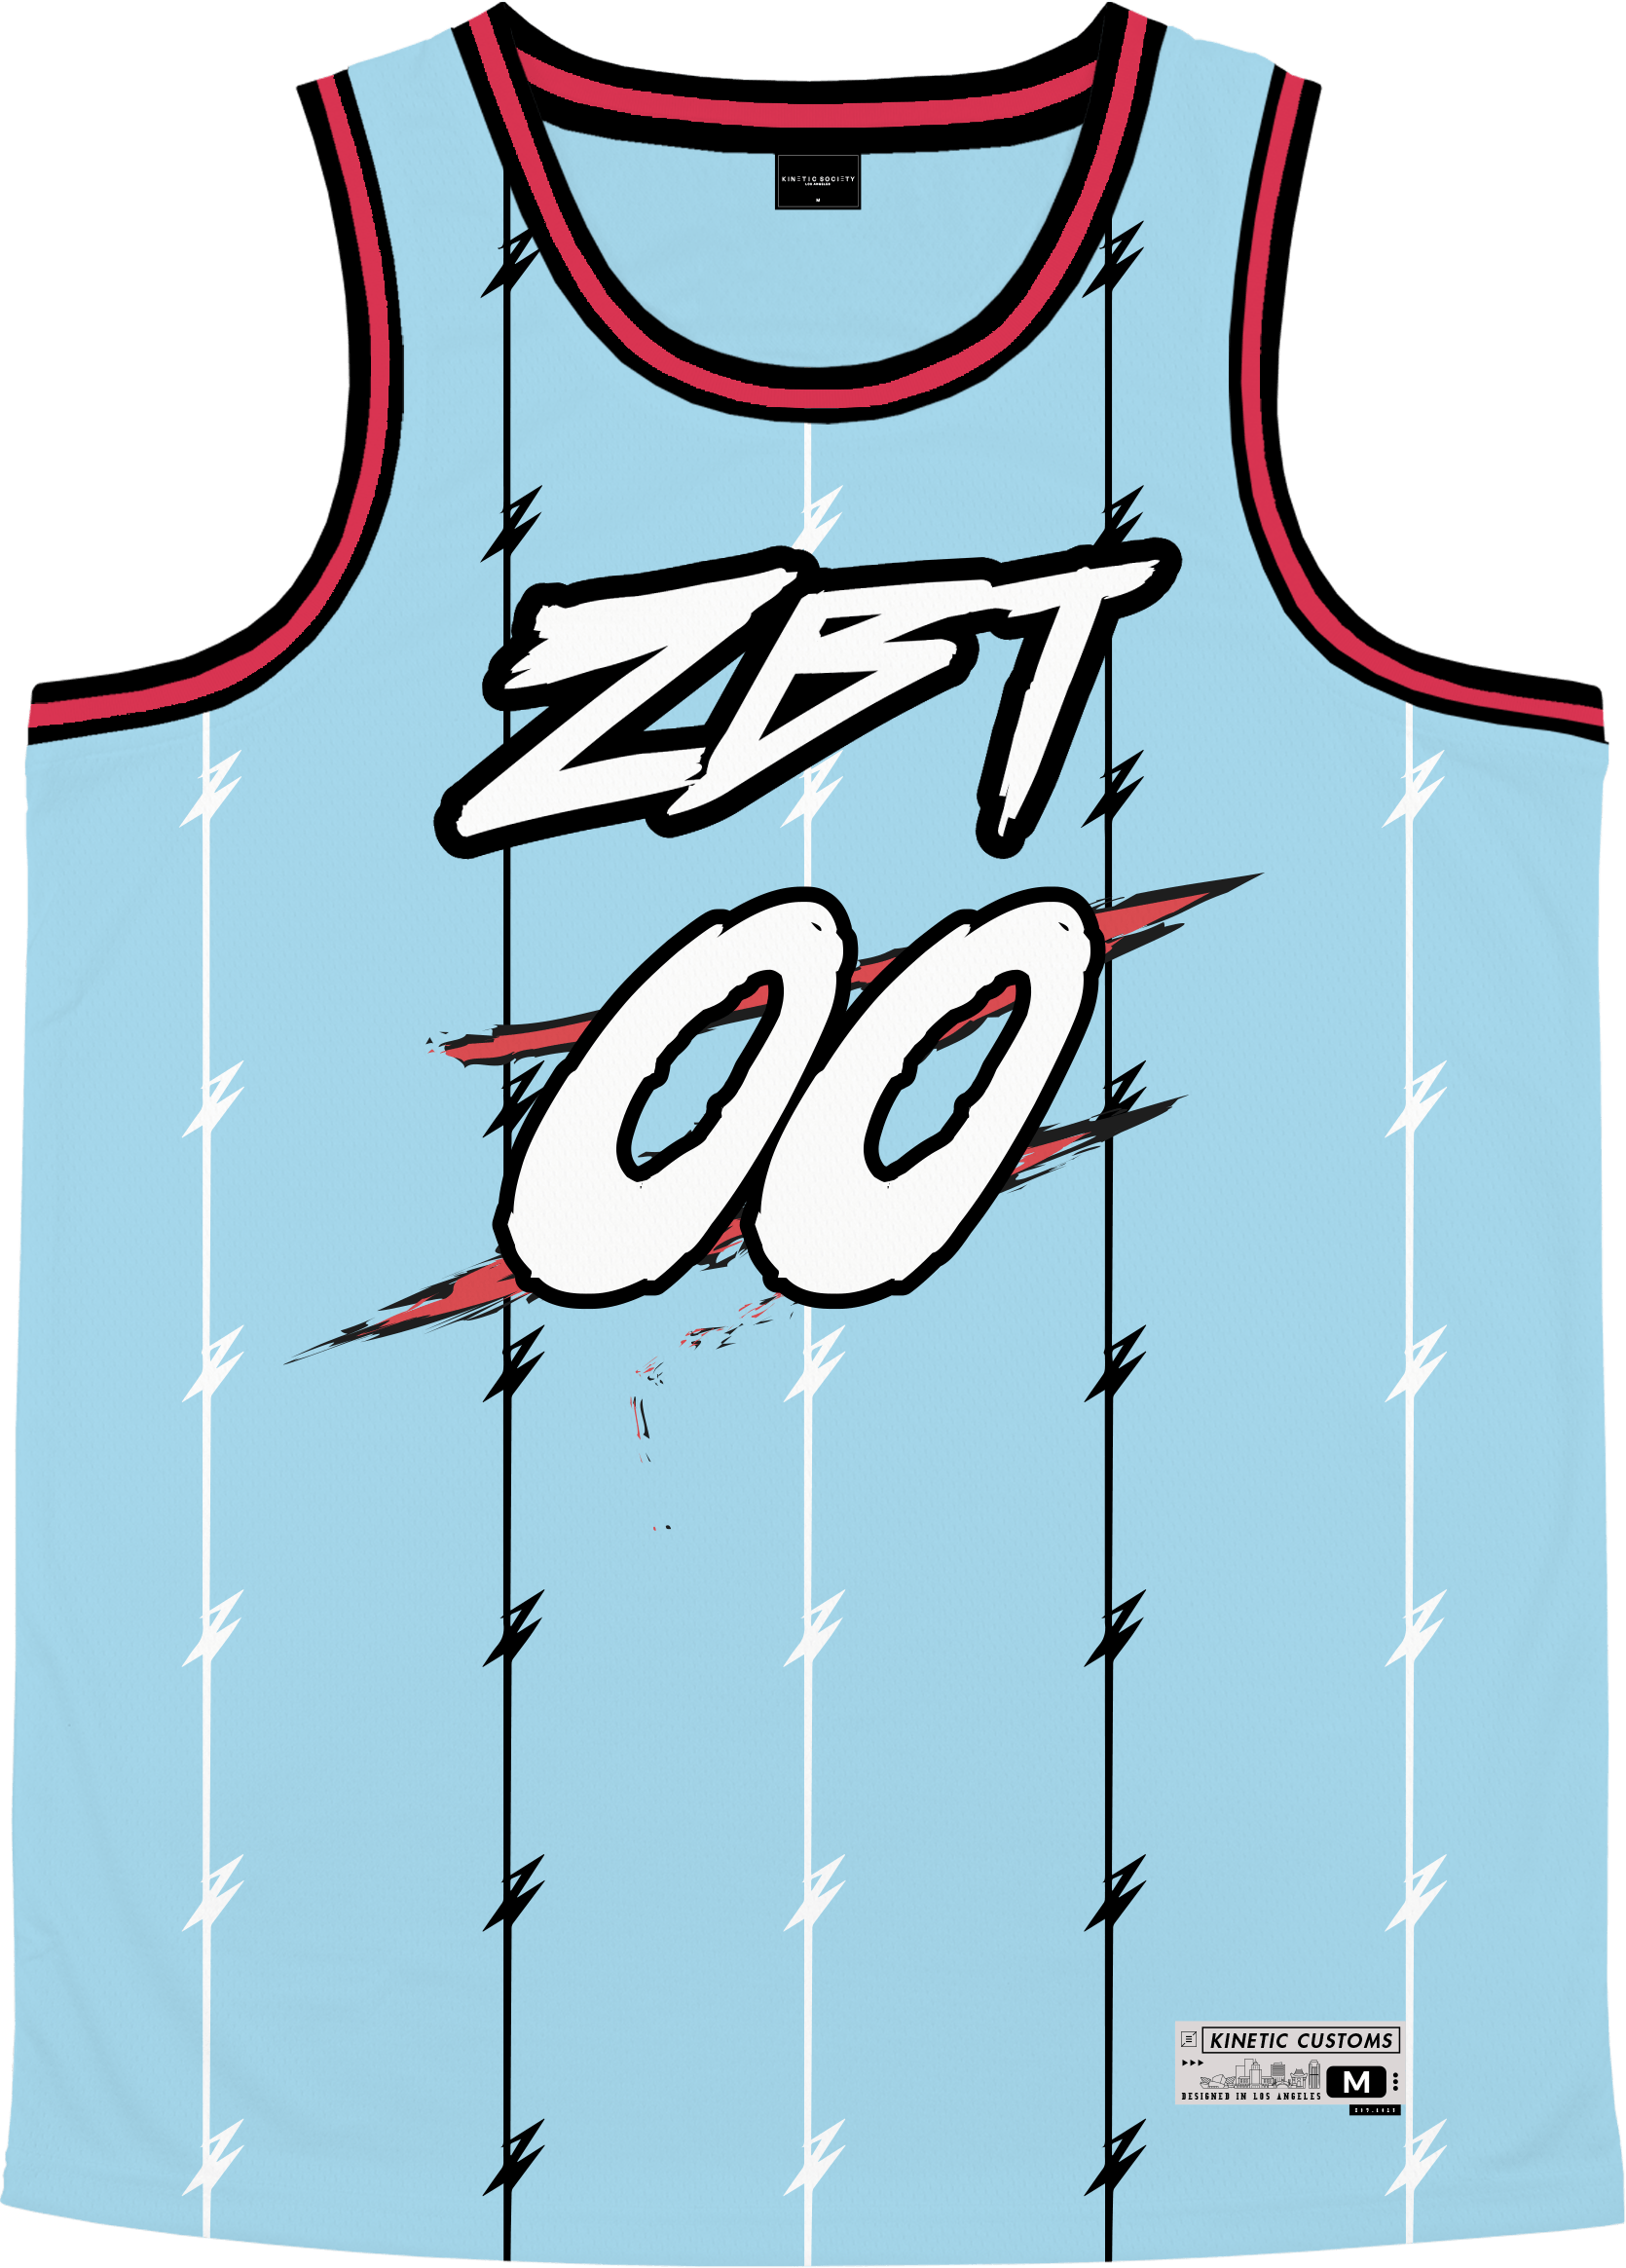 Zeta Beta Tau - Atlantis Basketball Jersey Premium Basketball Kinetic Society LLC 